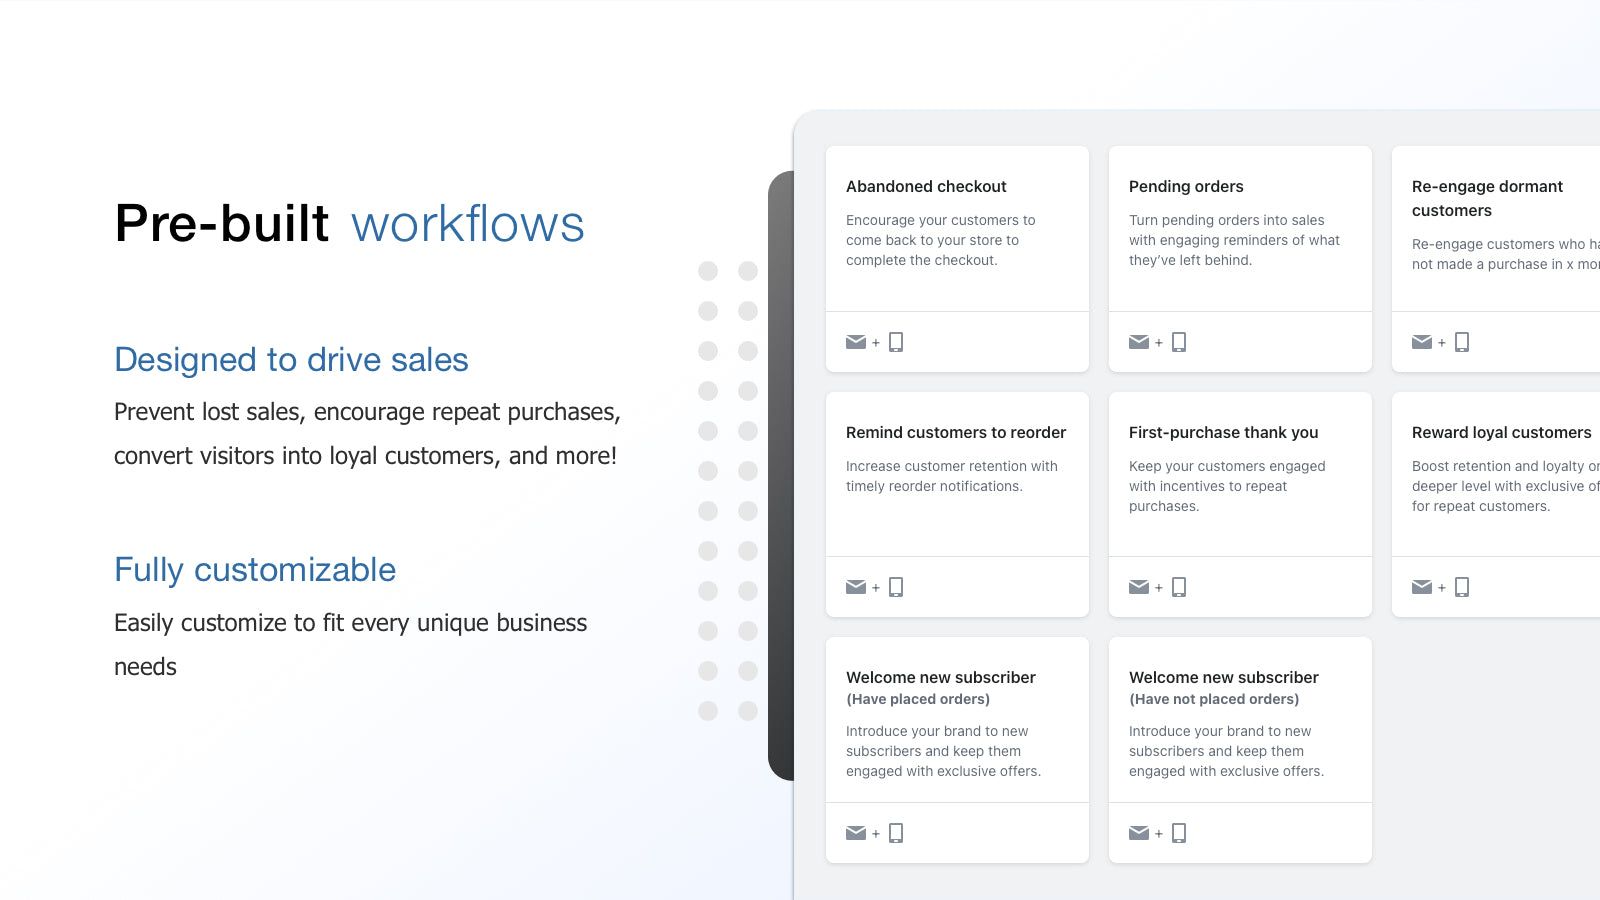 Pre-built workflows / Customer journeys